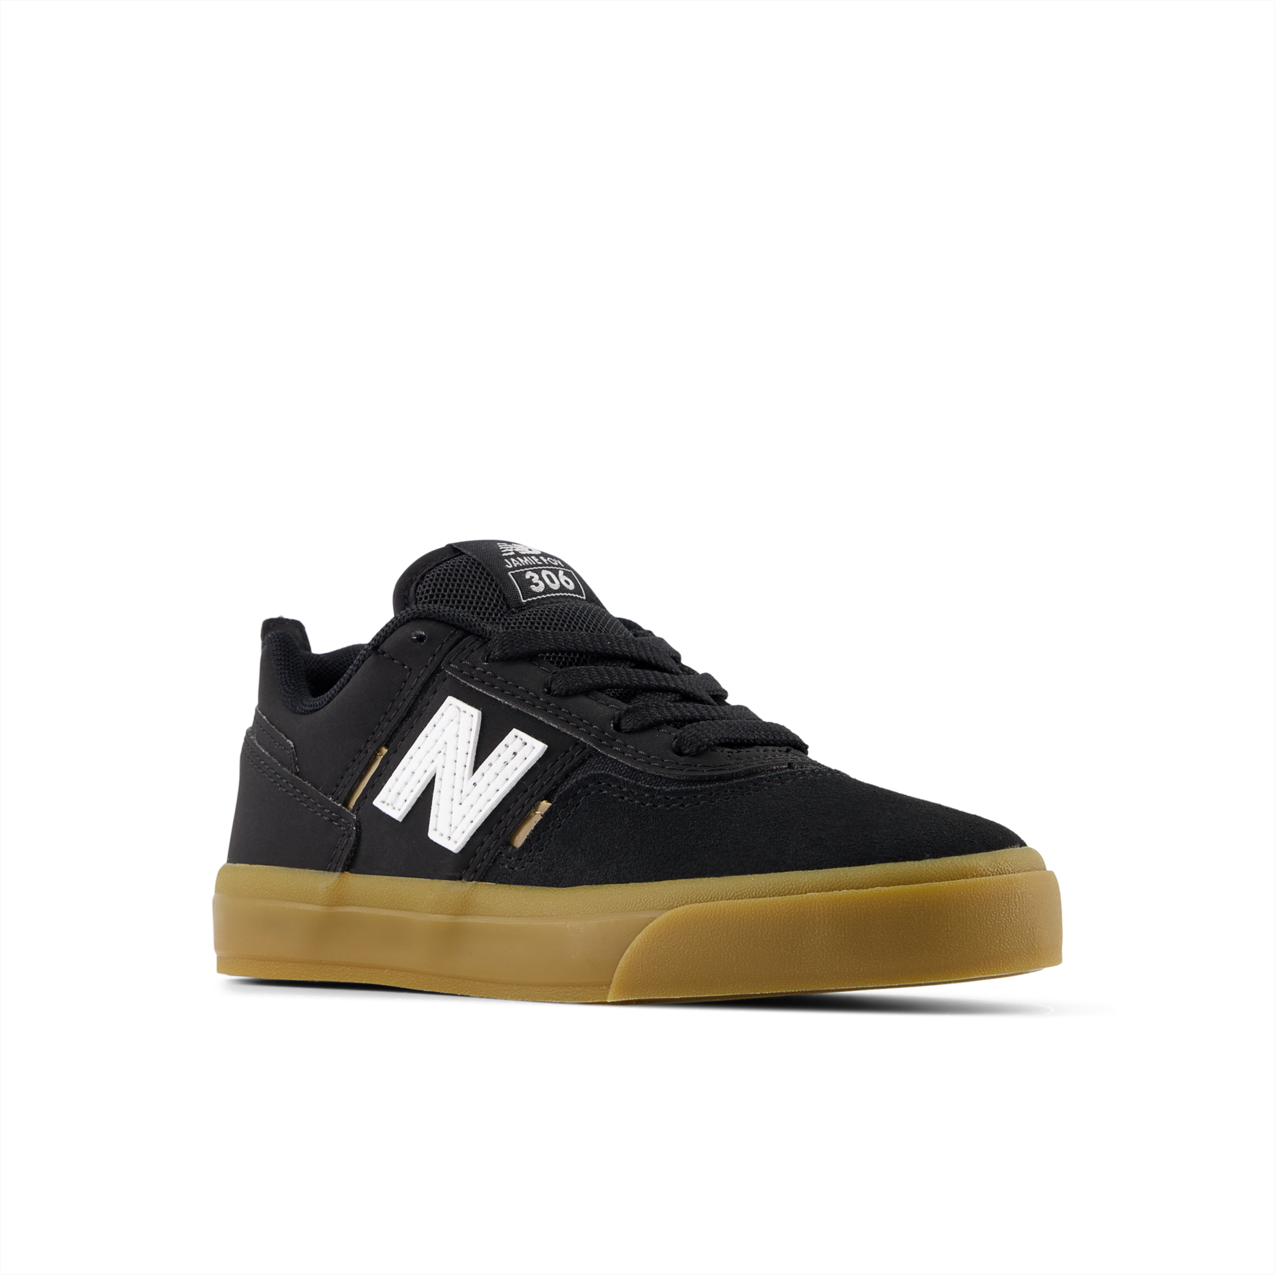 New Balance Numeric Kids Jamie Foy 306 Black Gum 070 Shoes